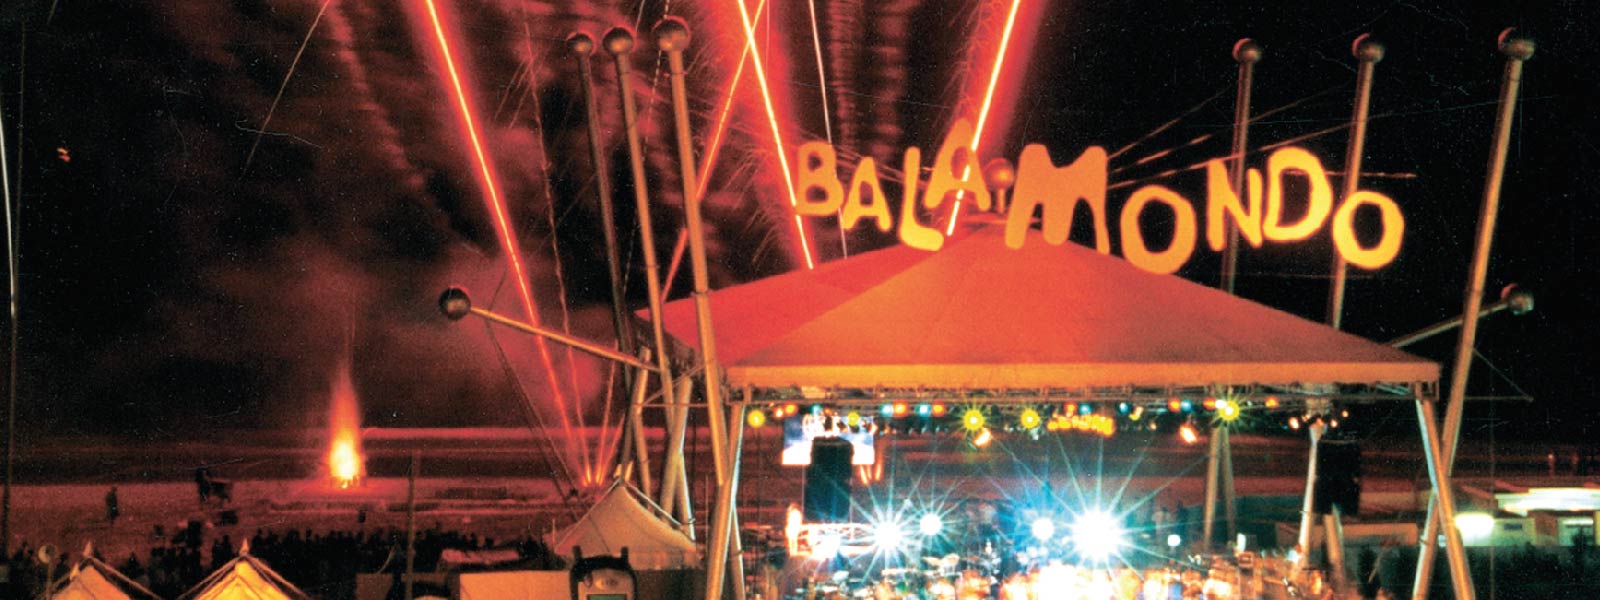 BALAMONDO WORLD MUSIC FESTIVAL 1998